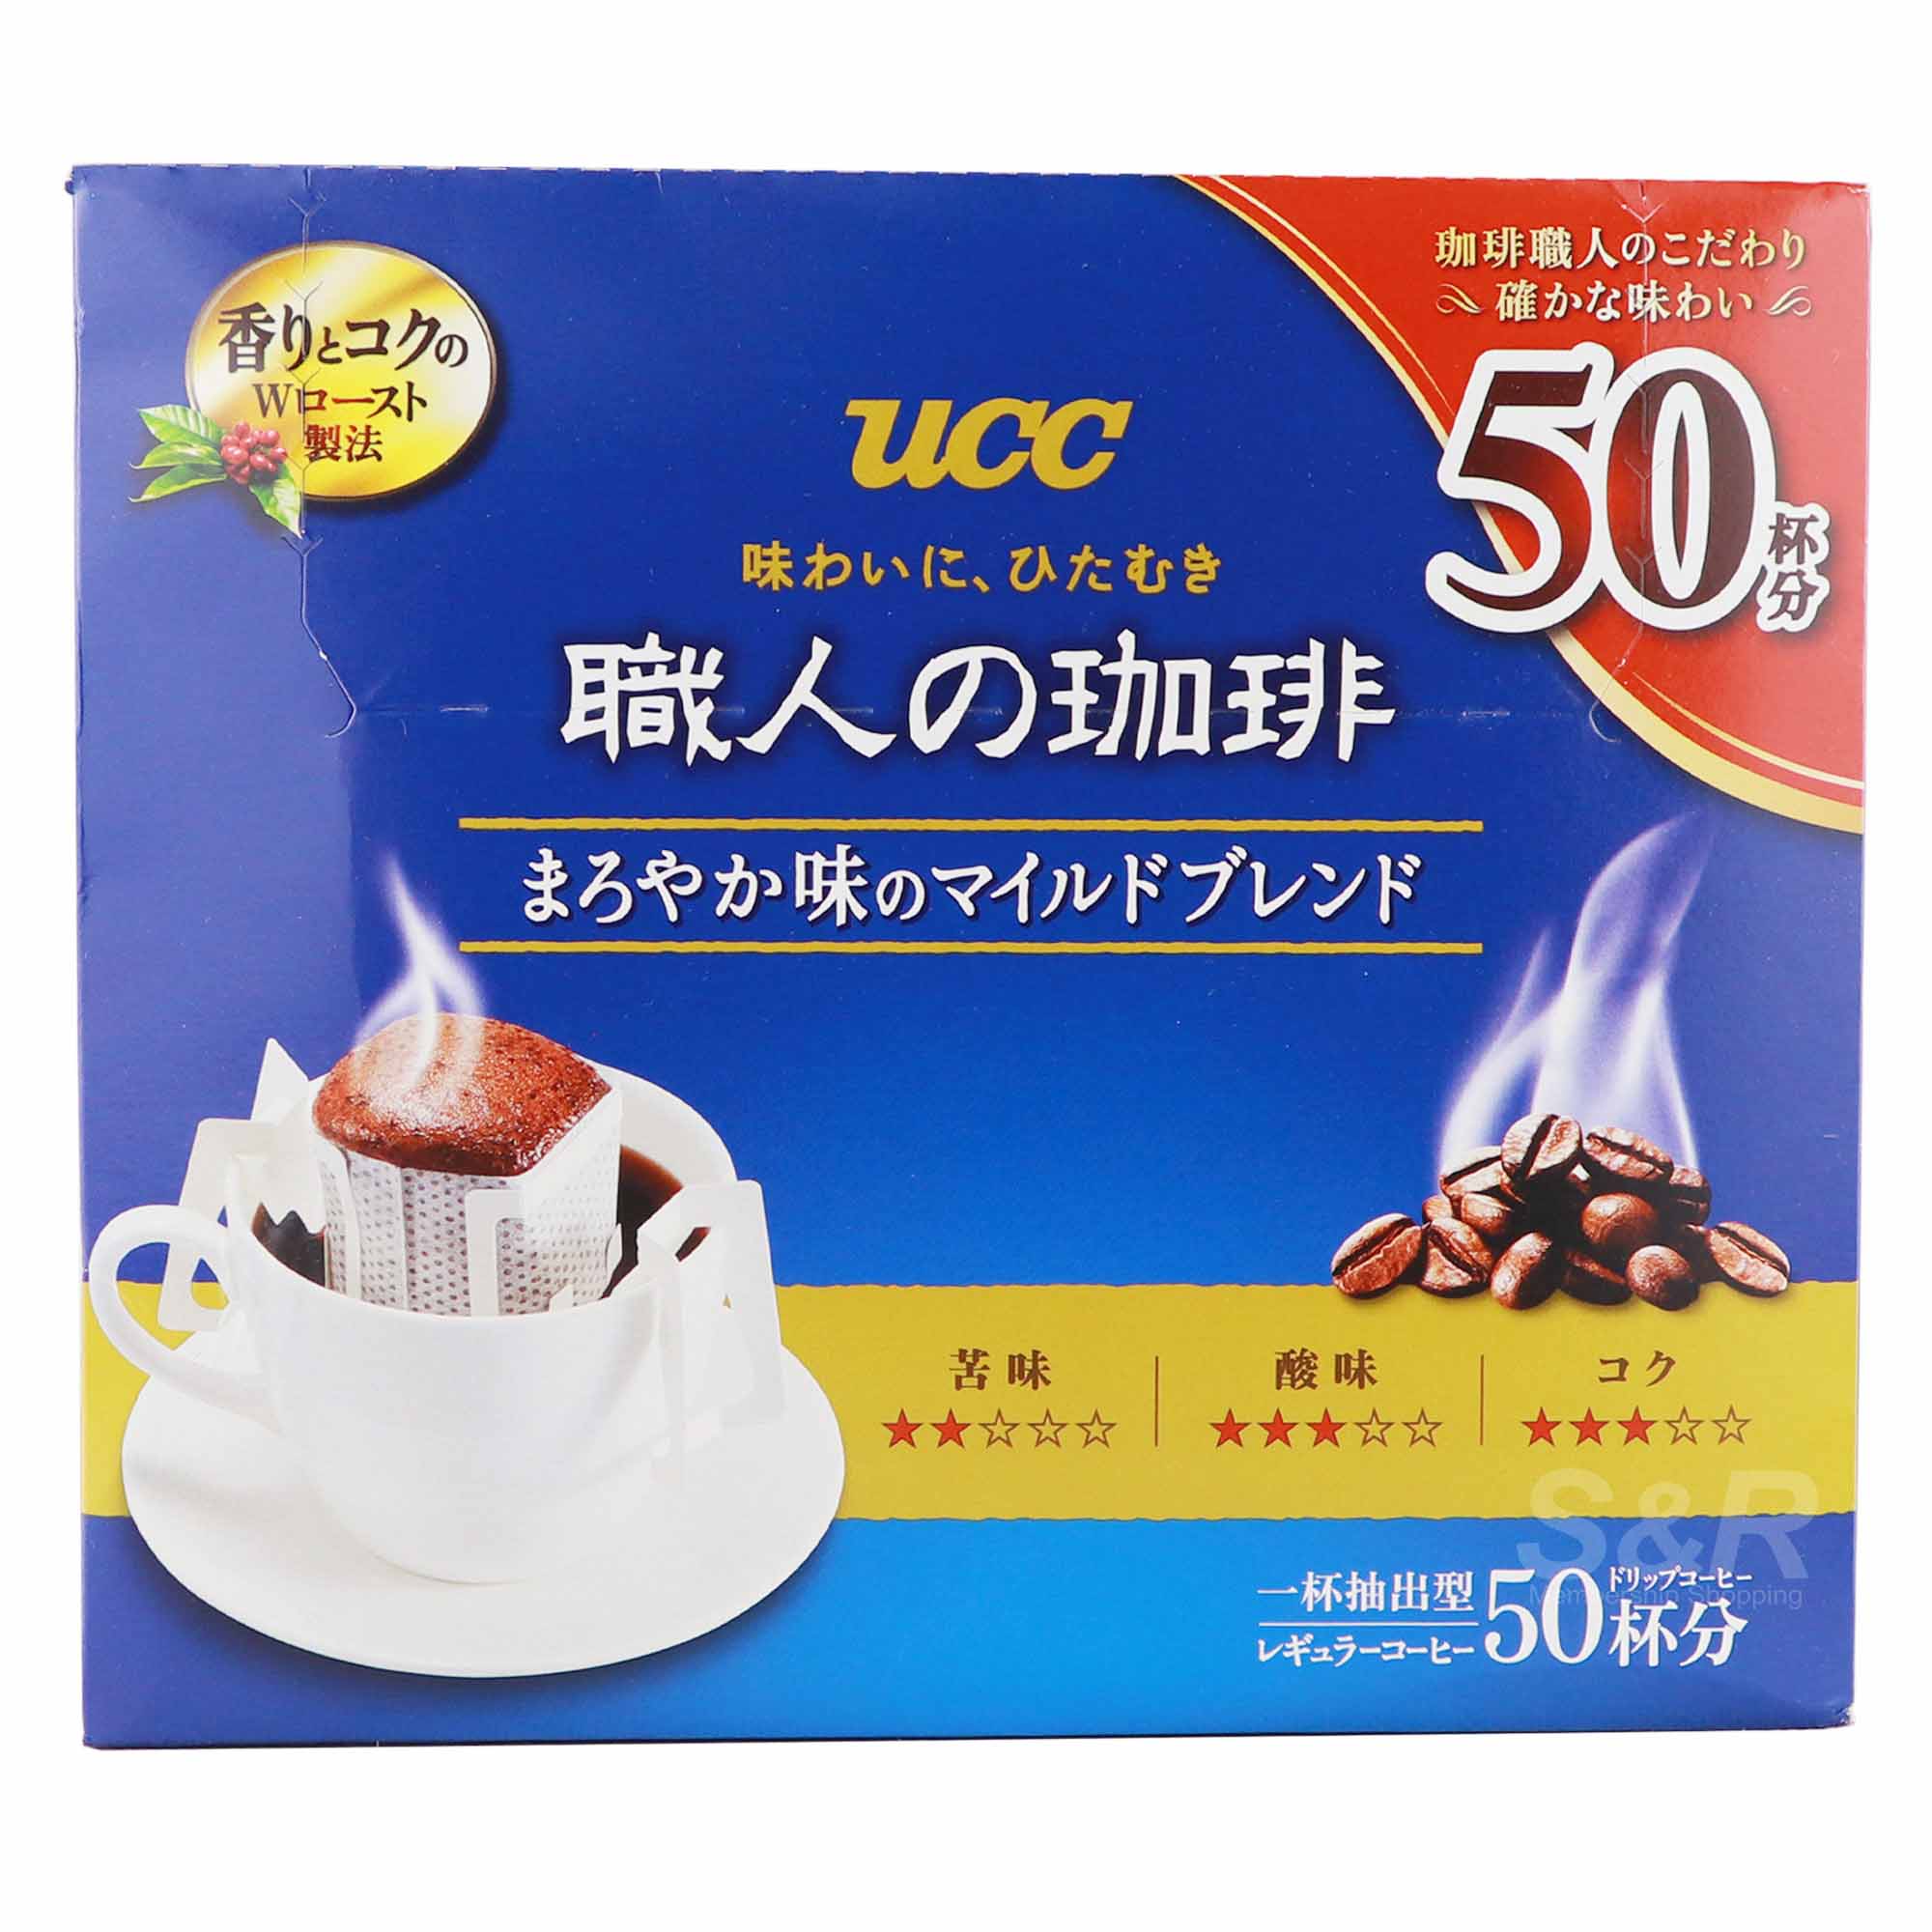 UCC Coffee Drip Mild Blend 50 packets